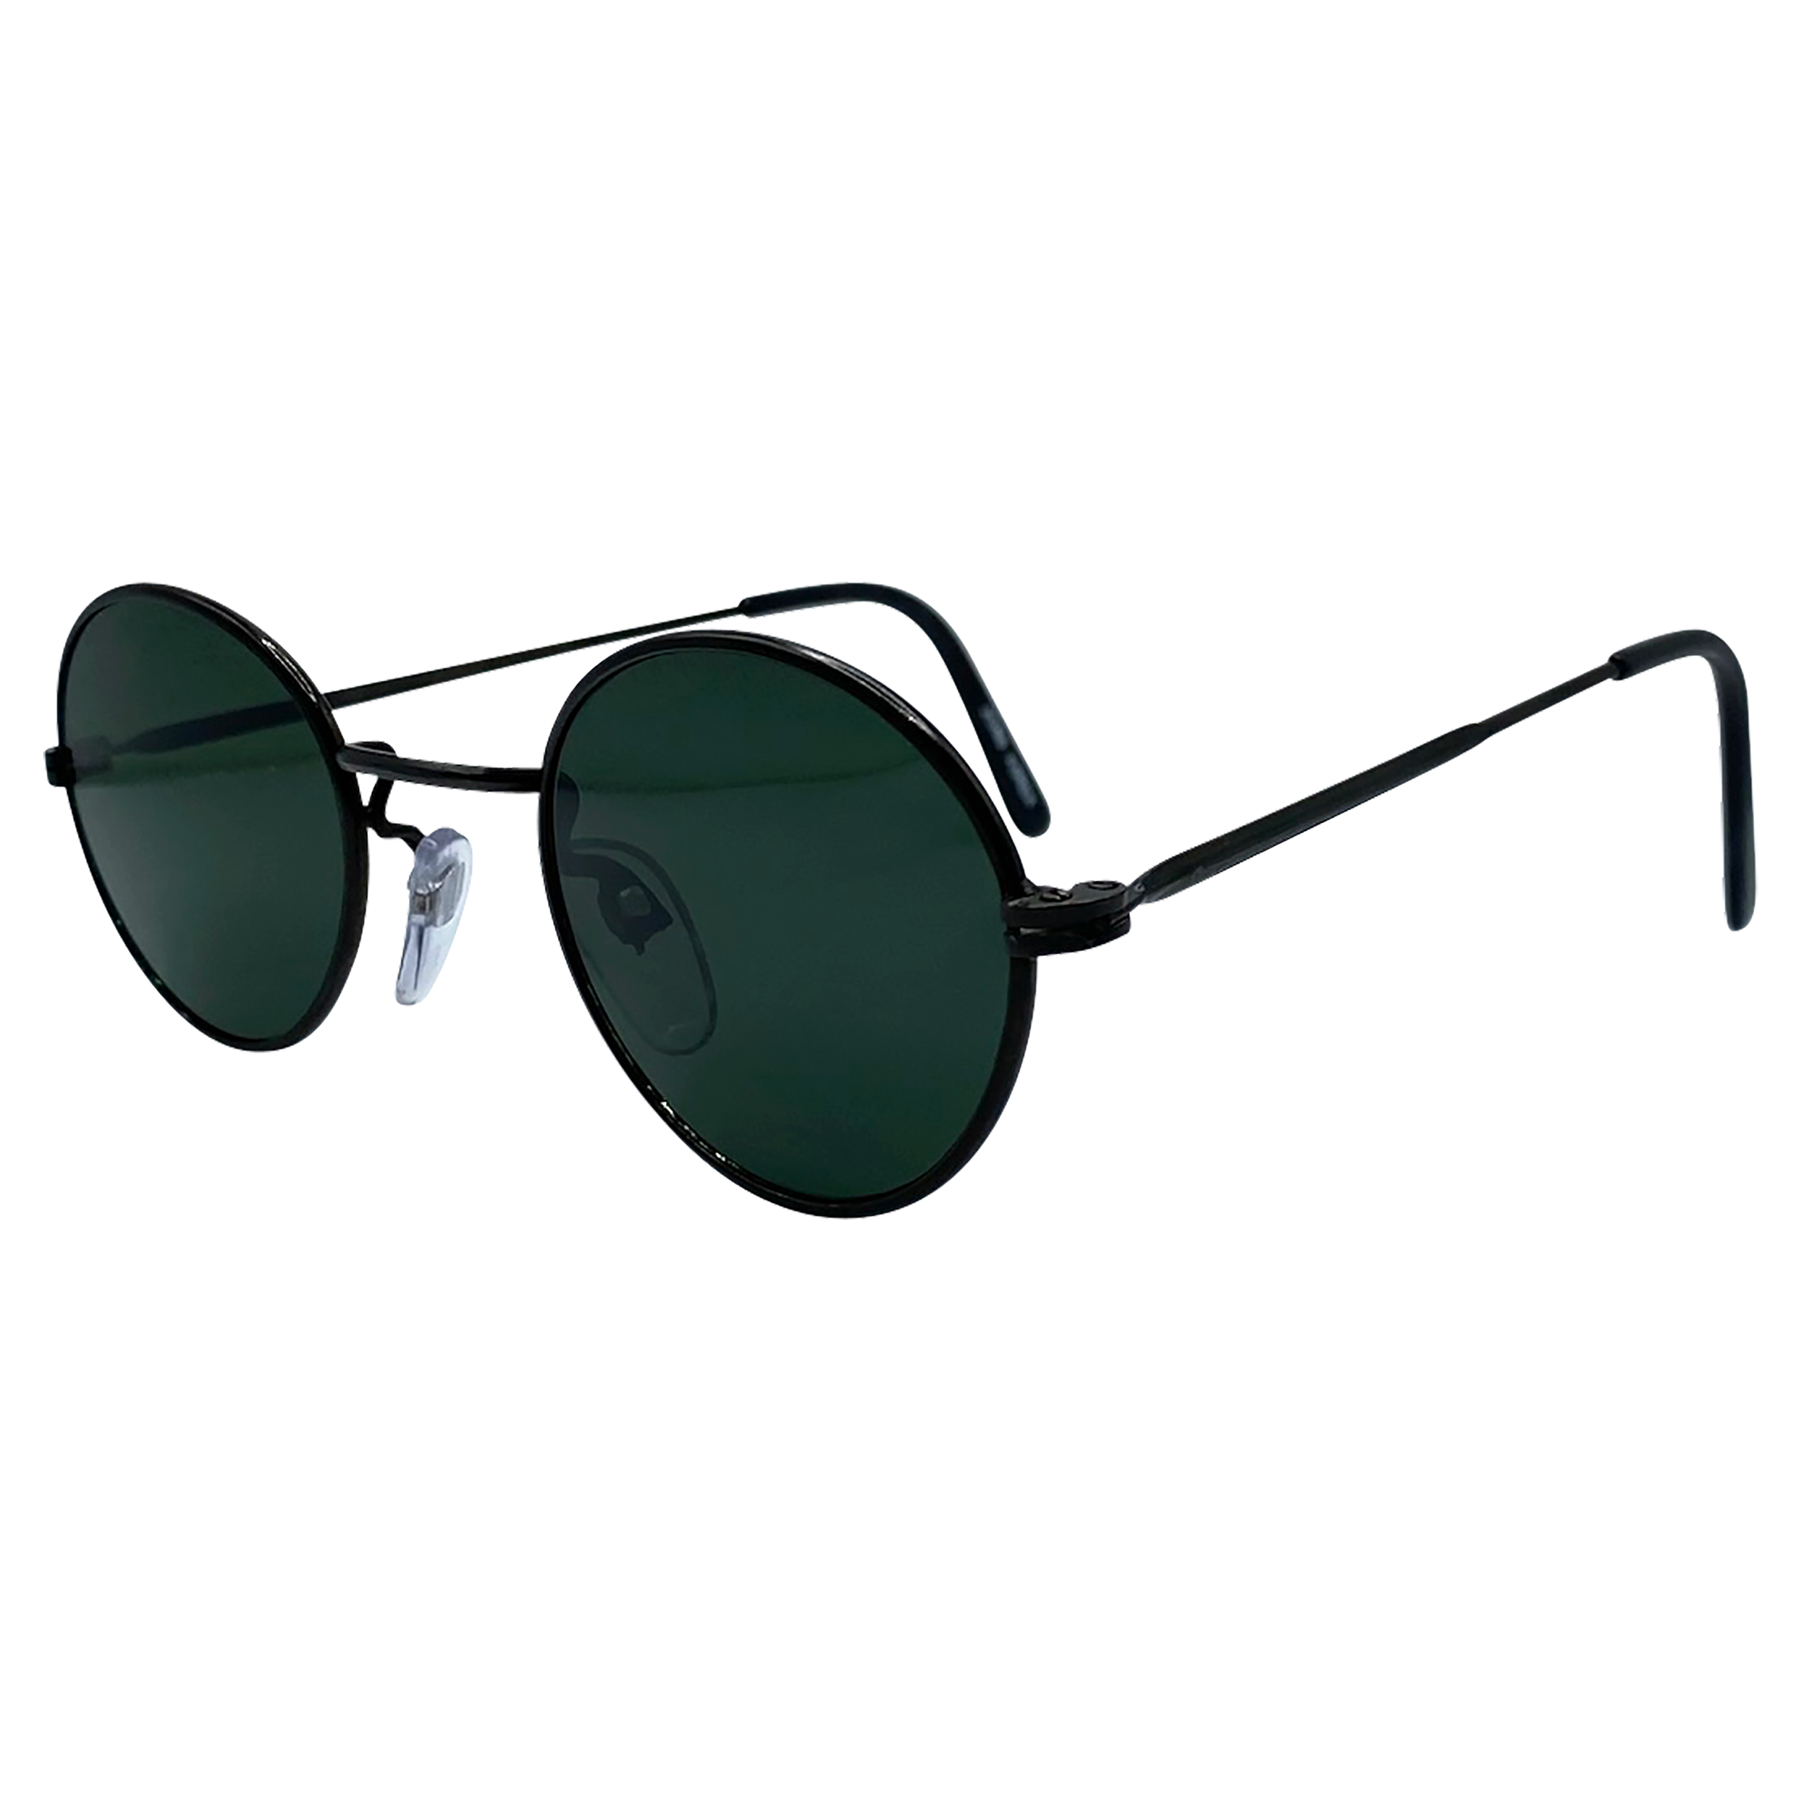 HARDING Black/G15 Round 60s Sunglasses